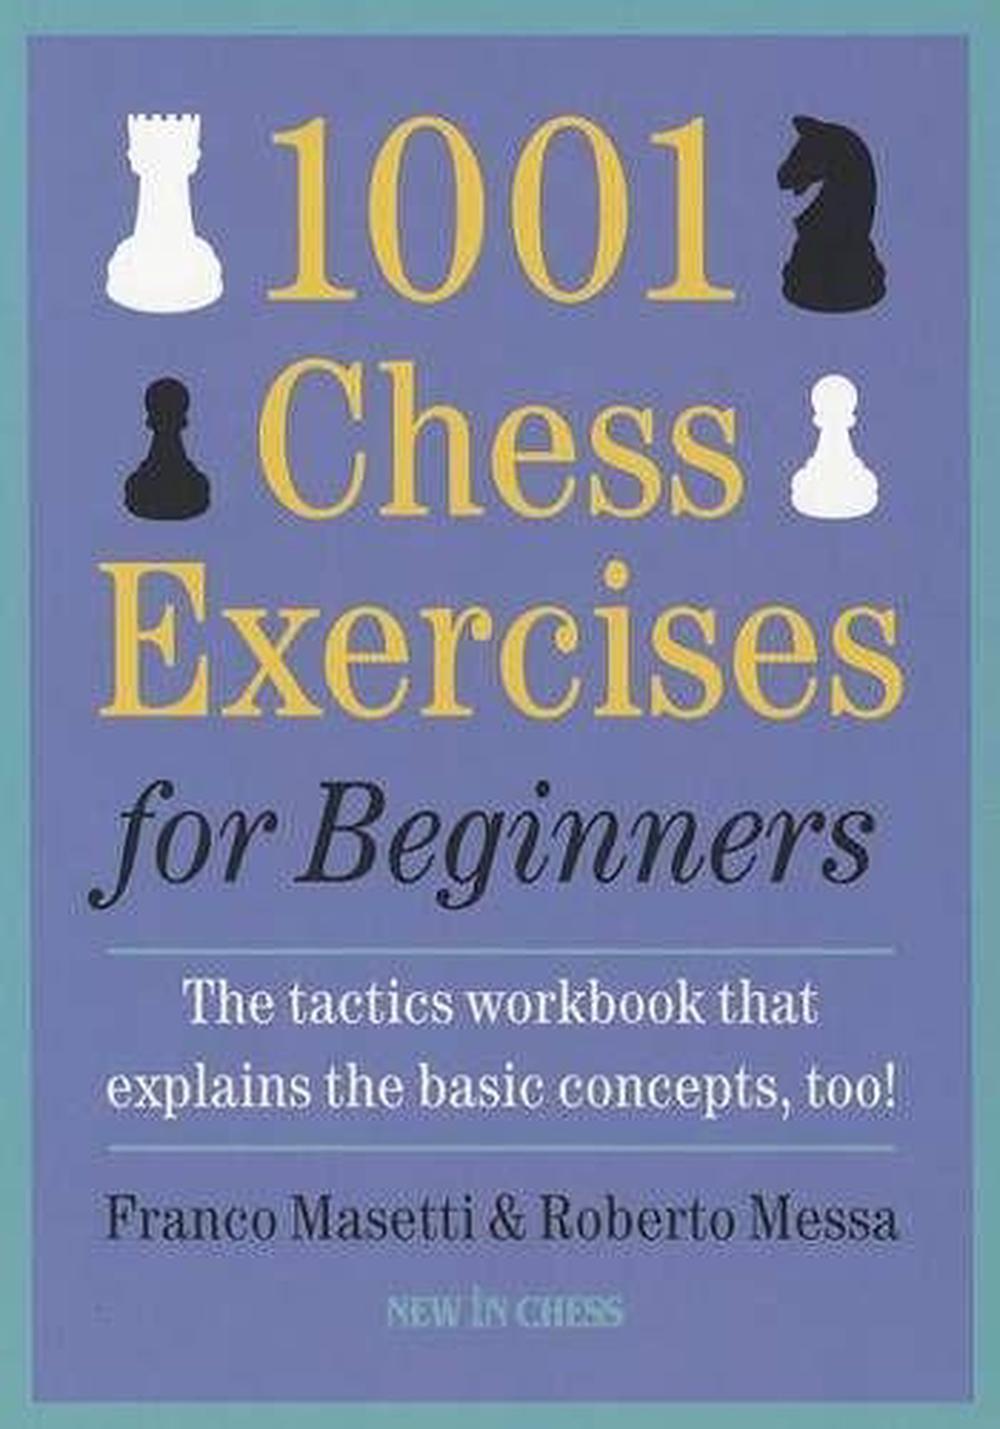 1001 chess exercises for beginners online